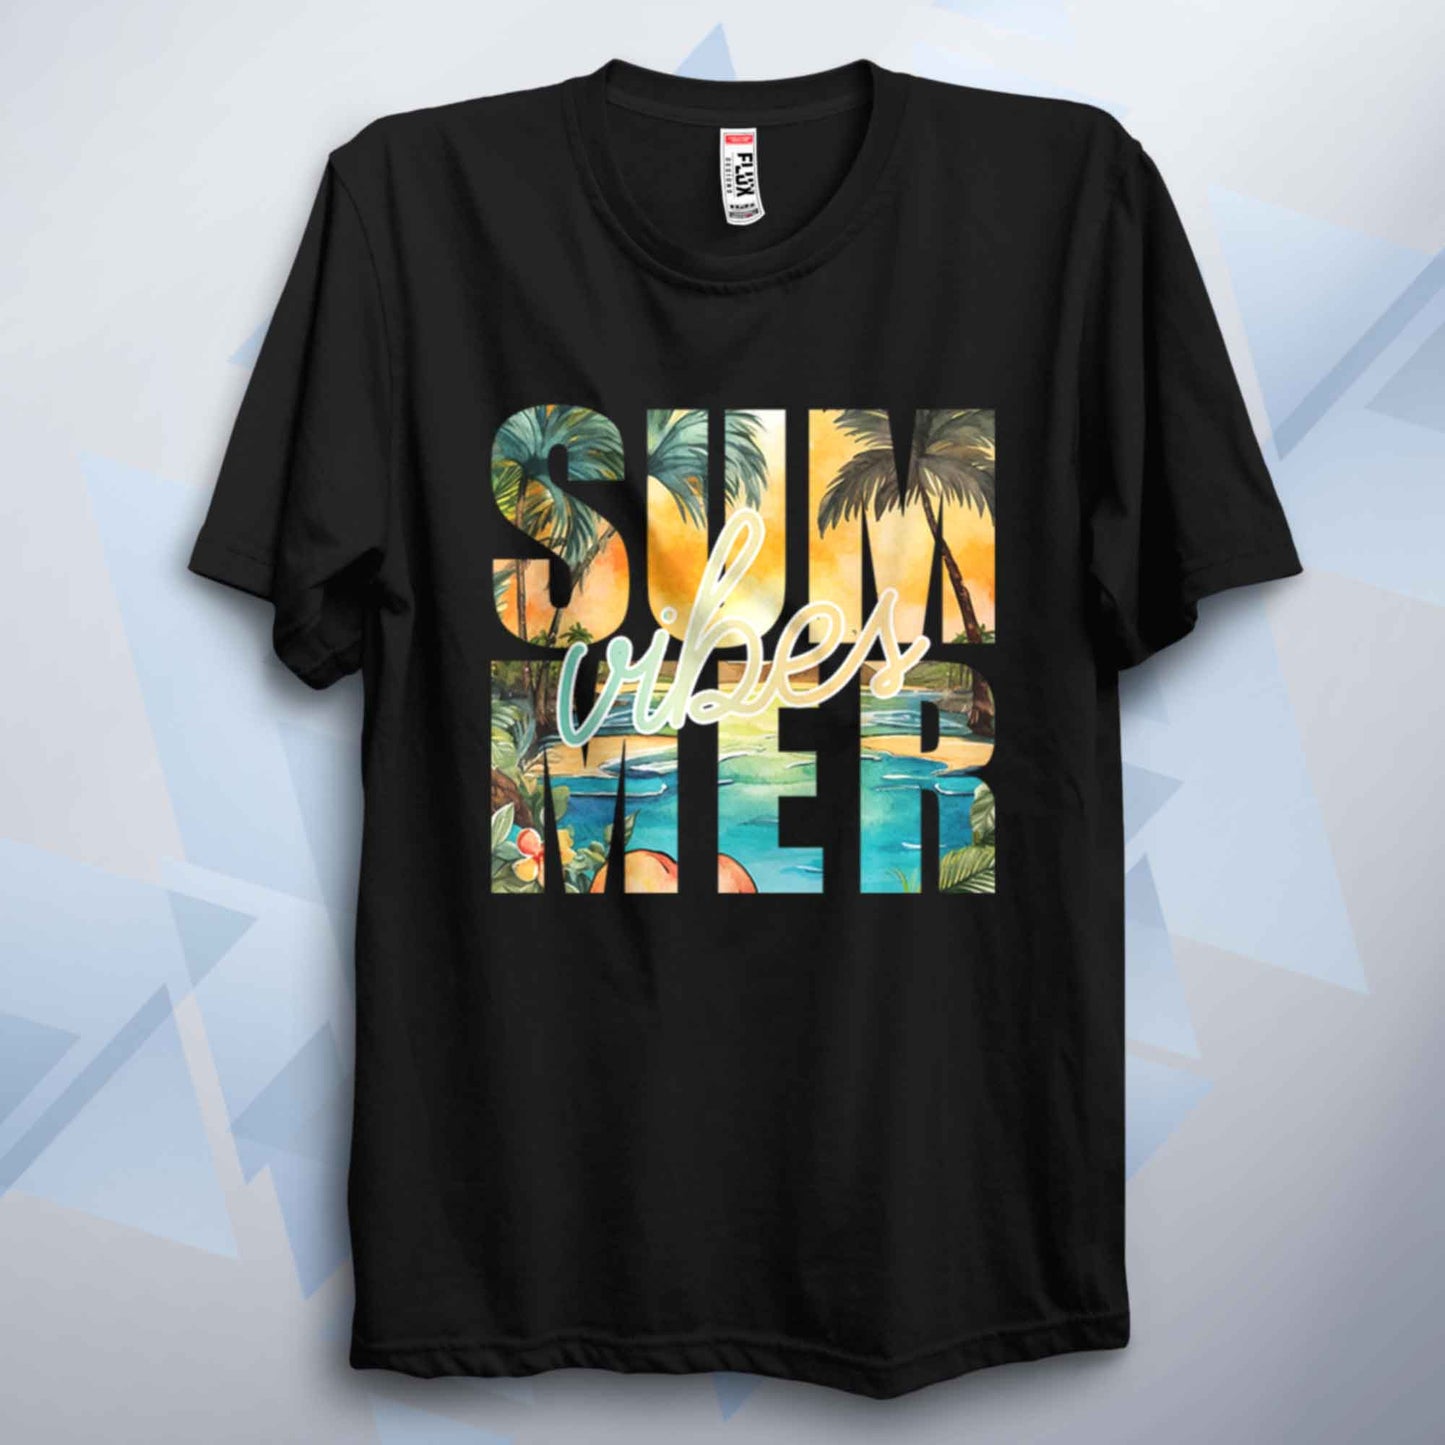 Big Summer Vibes Unisex Adult T Shirt